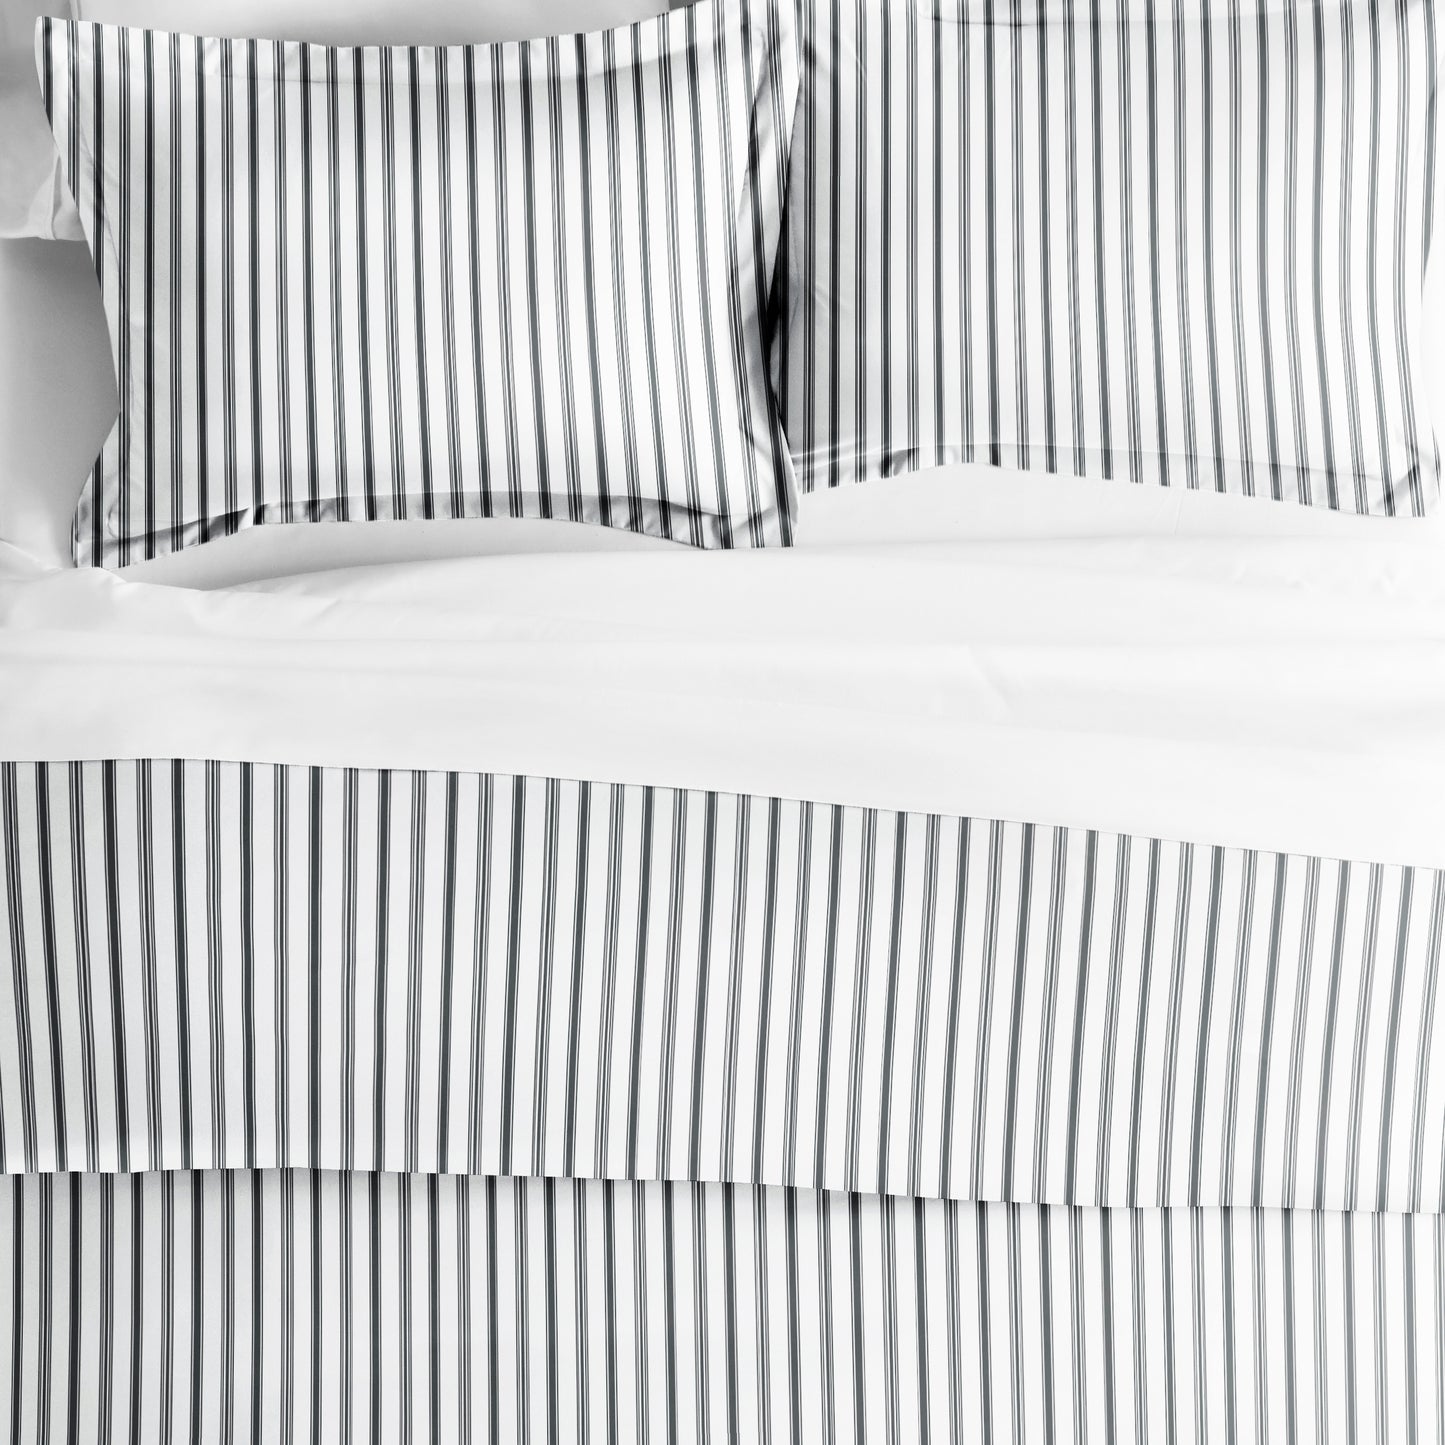 Duvet Cover Set in Striped Patterns